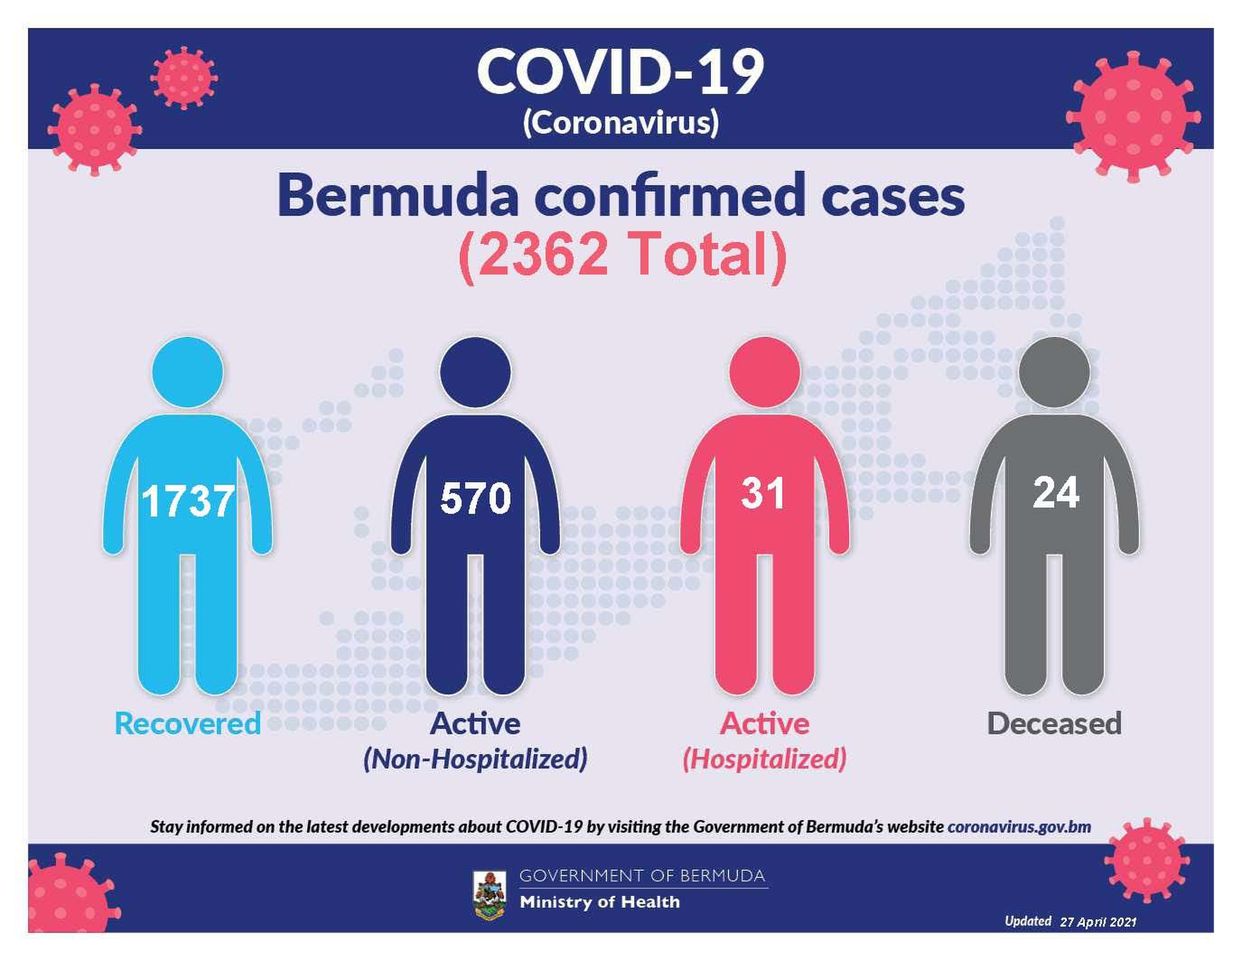 Minister Wilson reports 5 new COVID-19 cases in Bermuda, 27 April